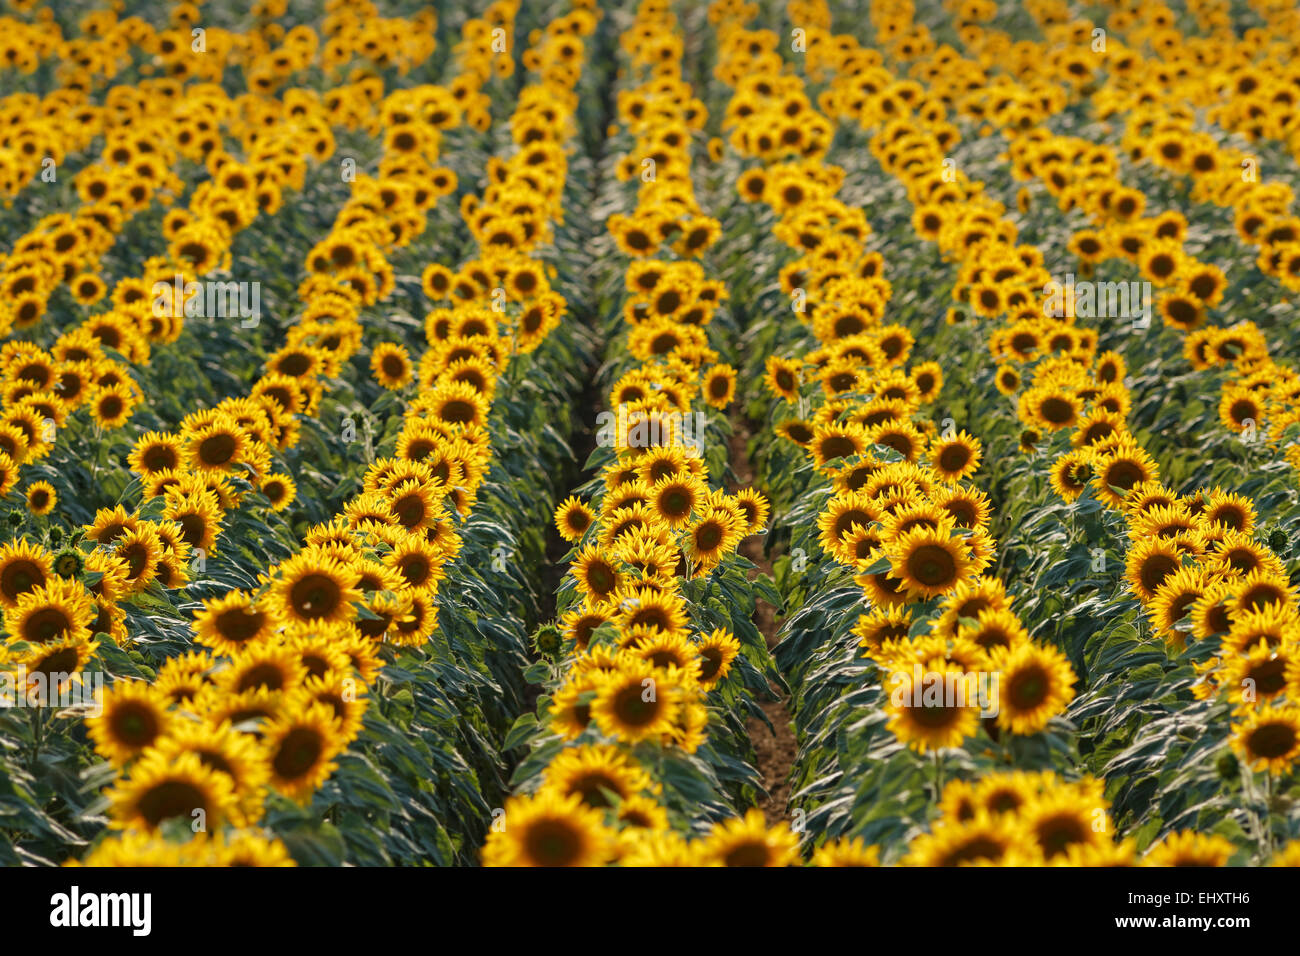 Austria, Burgenland, Oslip, sunflower field Stock Photo